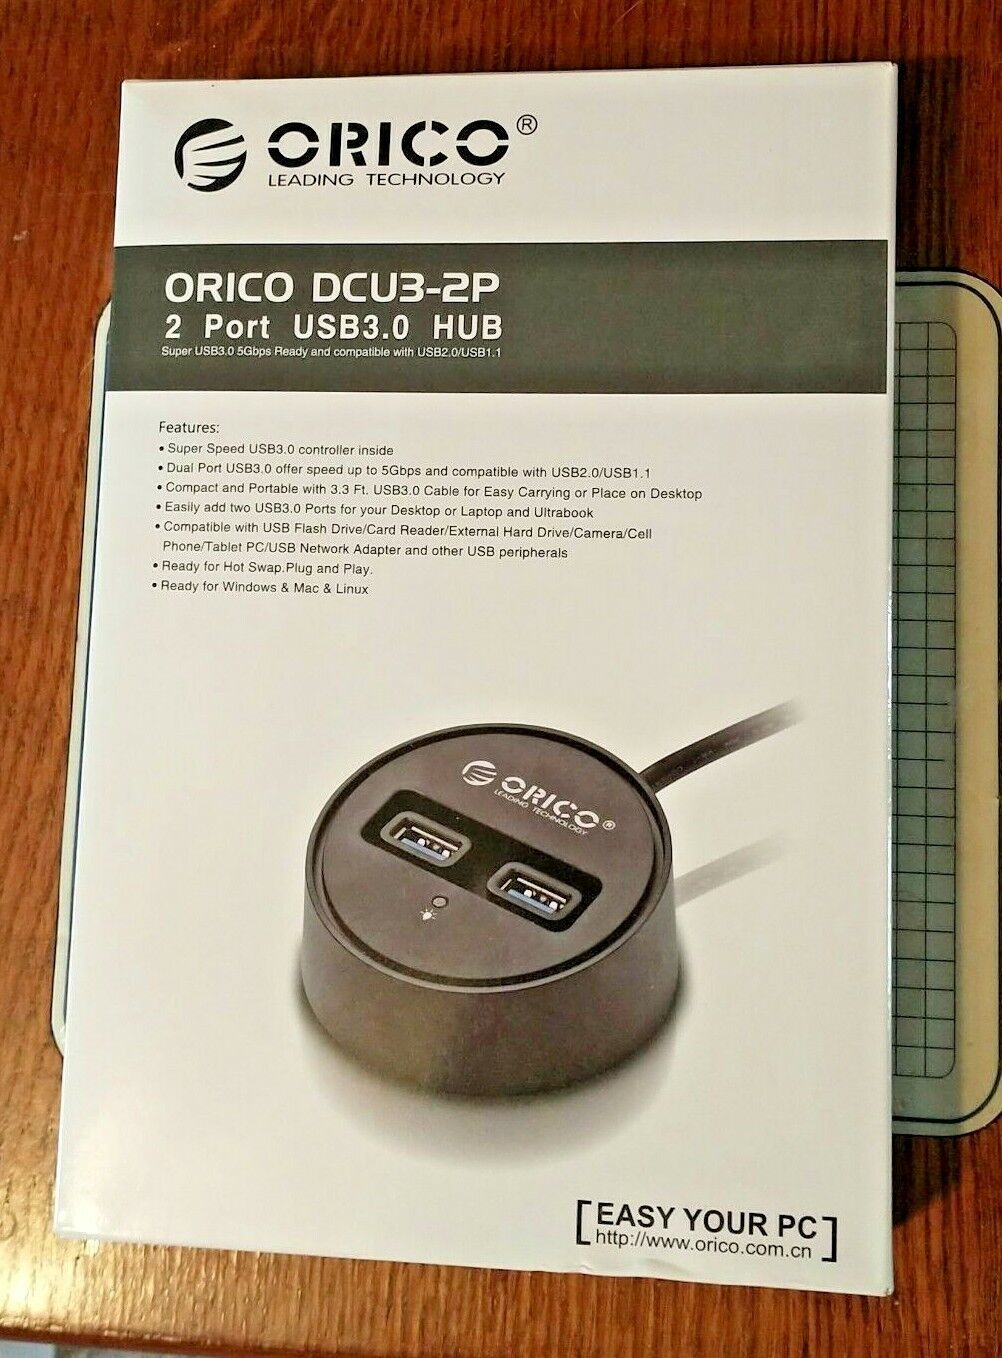 ORICO 2 Port USB 3.0 Hub DCU3-2P